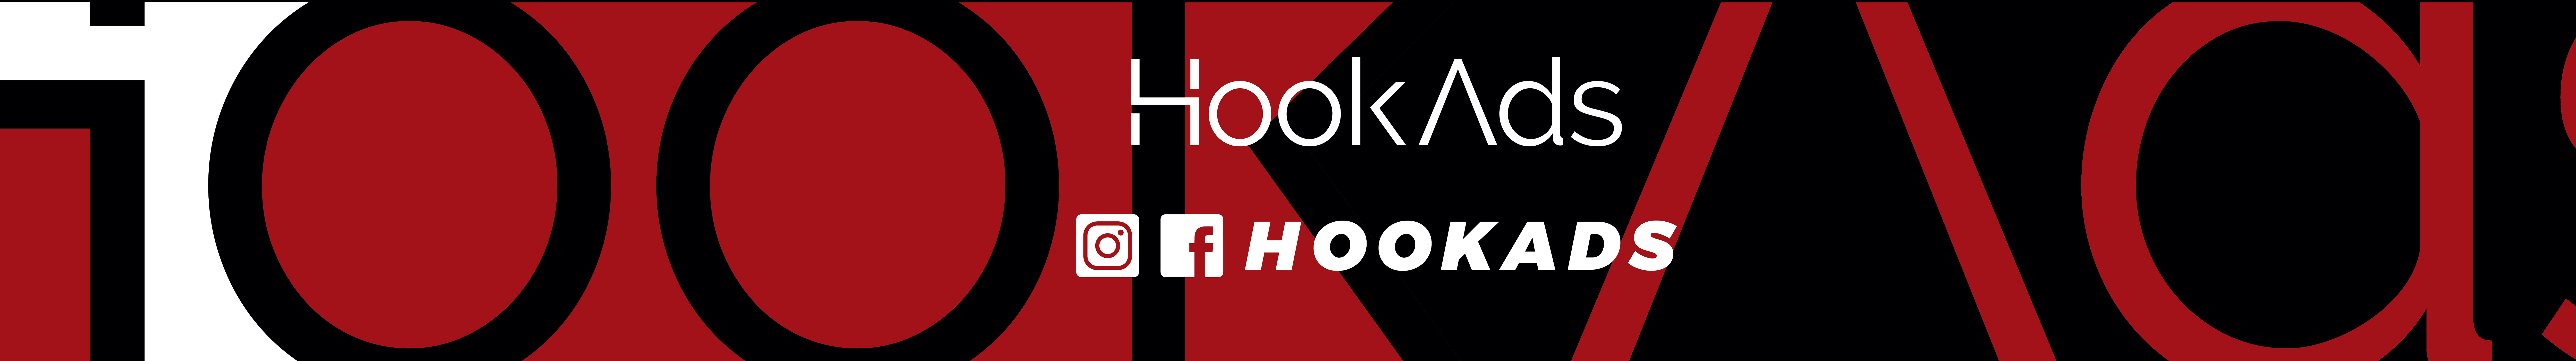 Hook Ads's profile banner